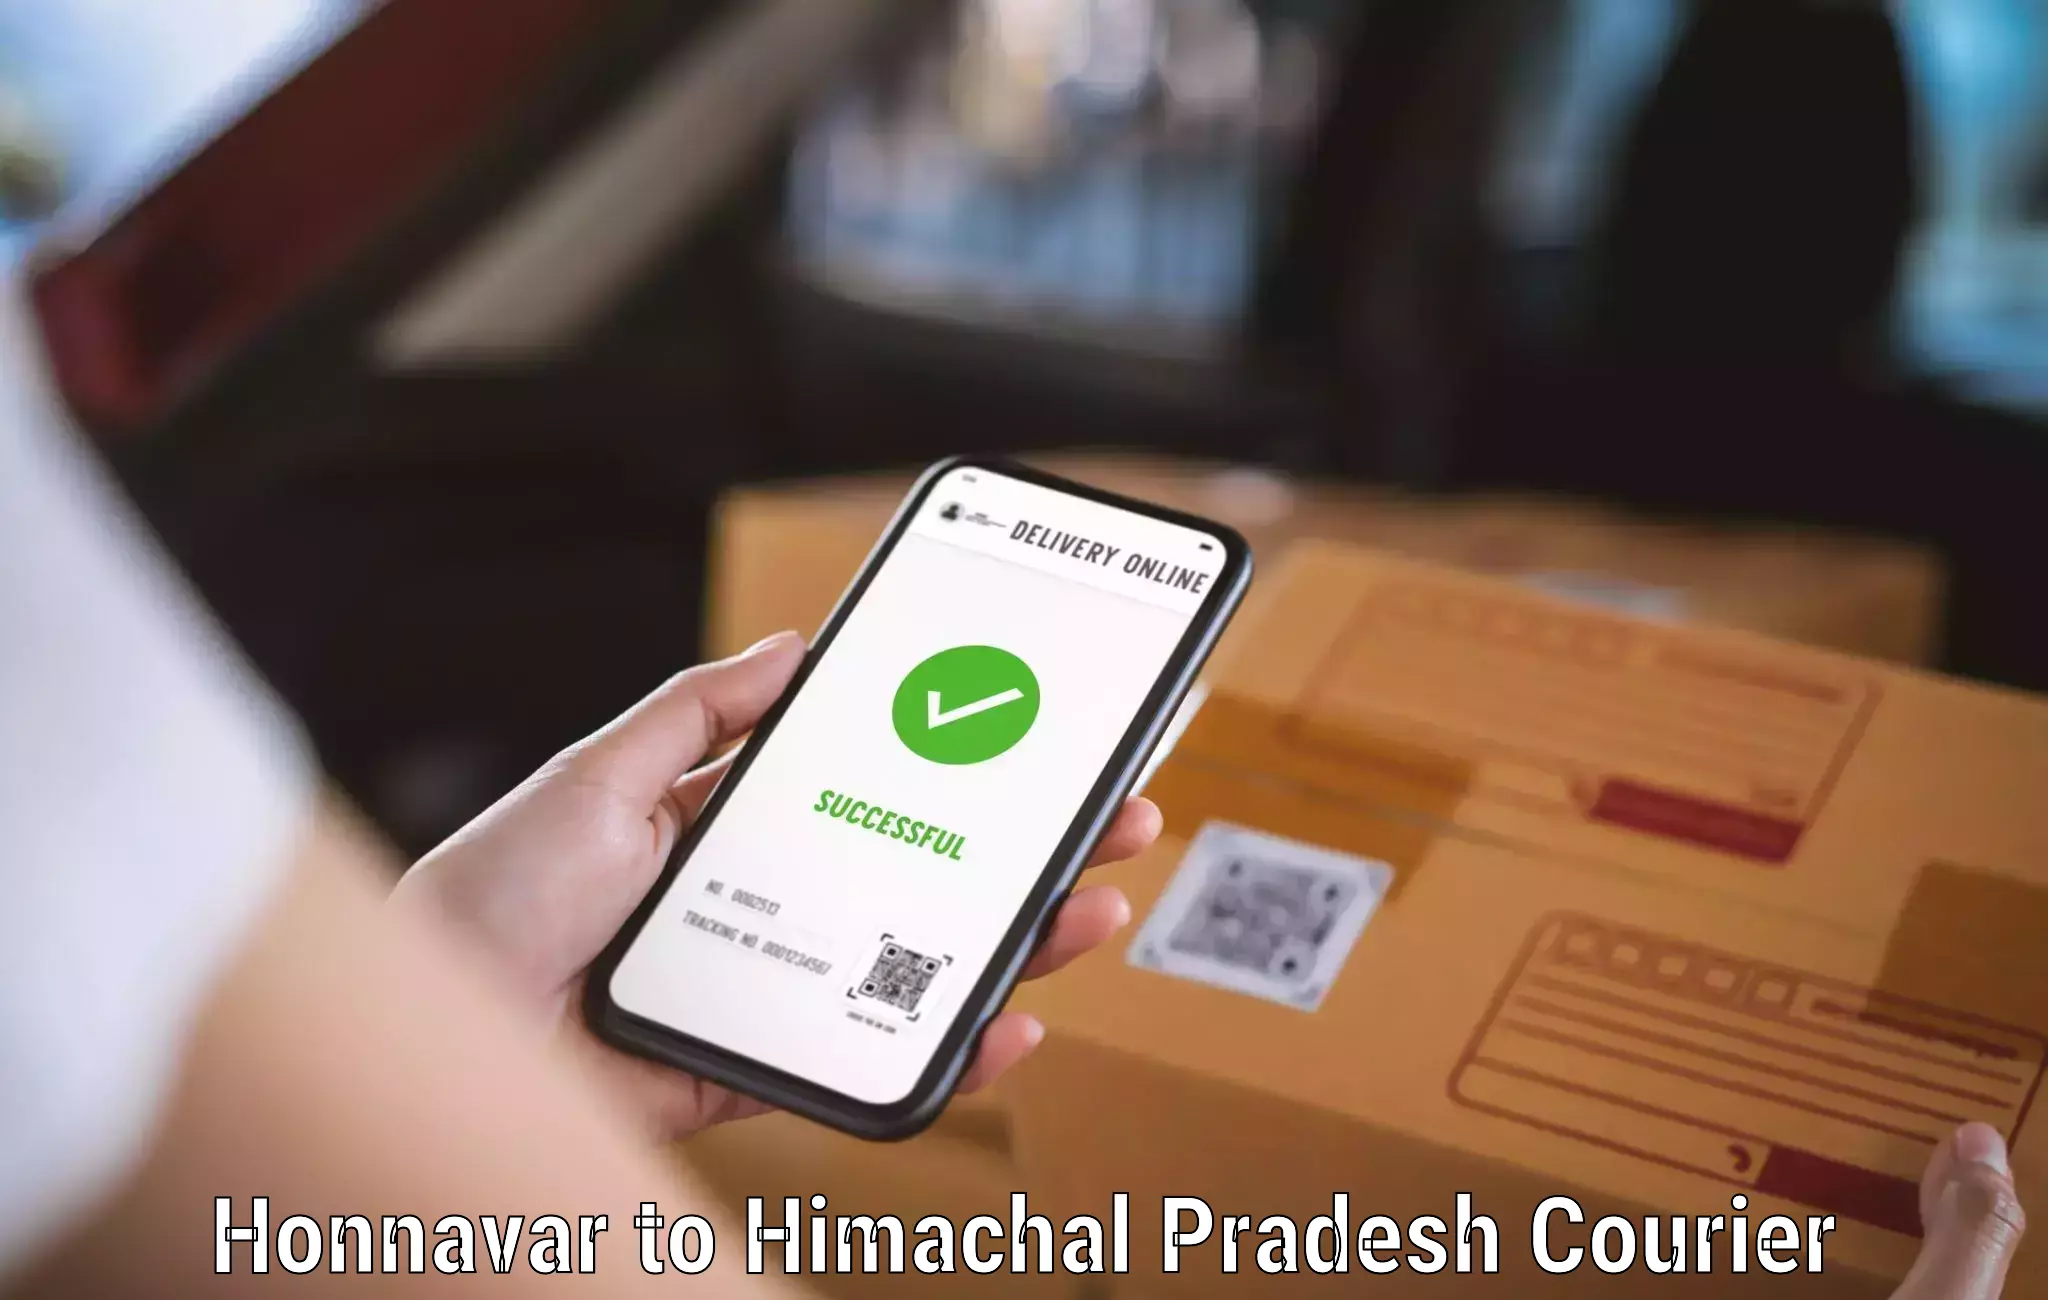 Package delivery network Honnavar to Himachal Pradesh